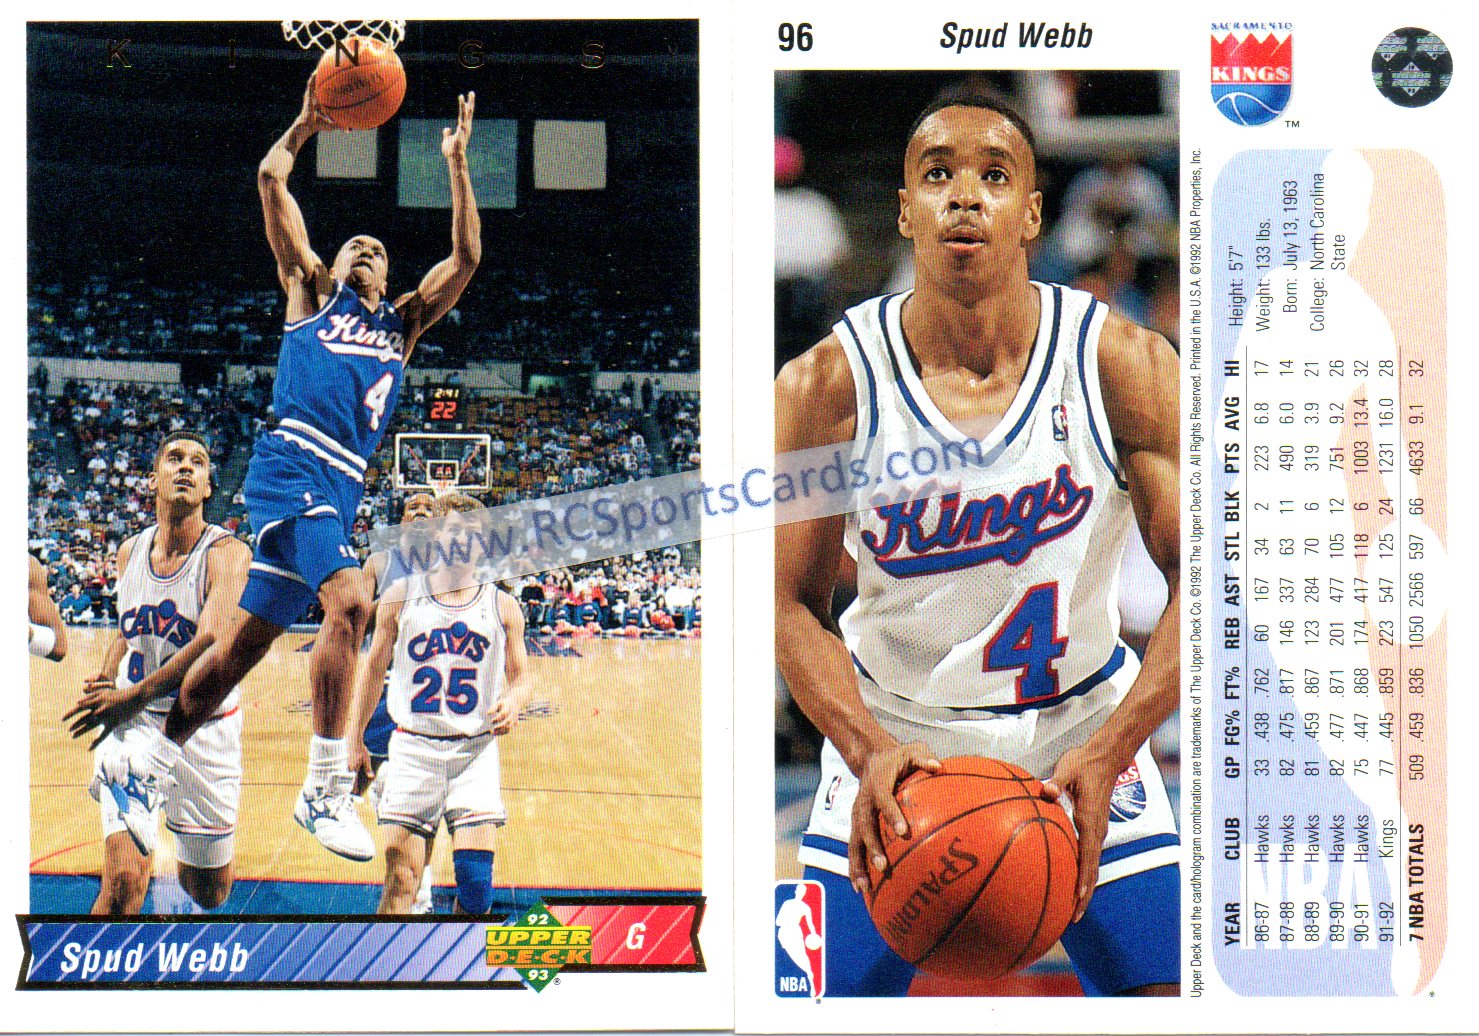  1992-93 Topps Basketball #63 Spud Webb Sacramento